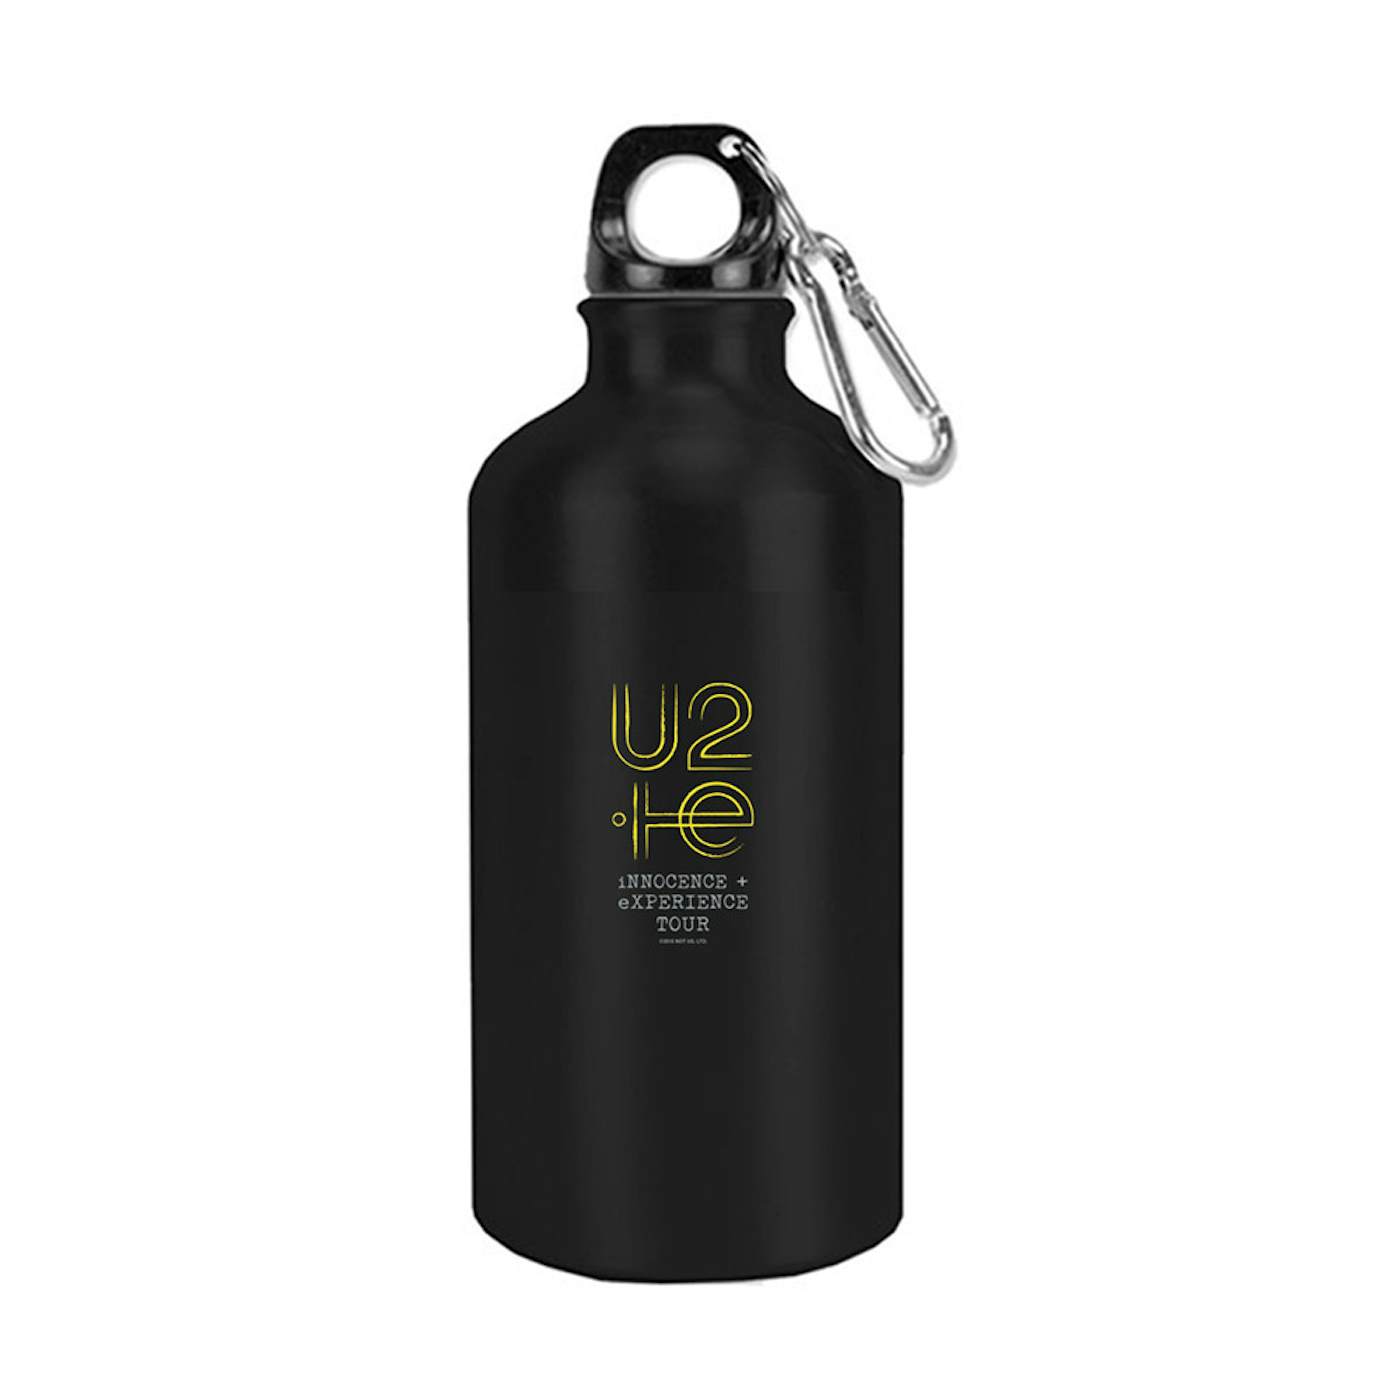 U2 Innocence + Experience Tour Water Bottle